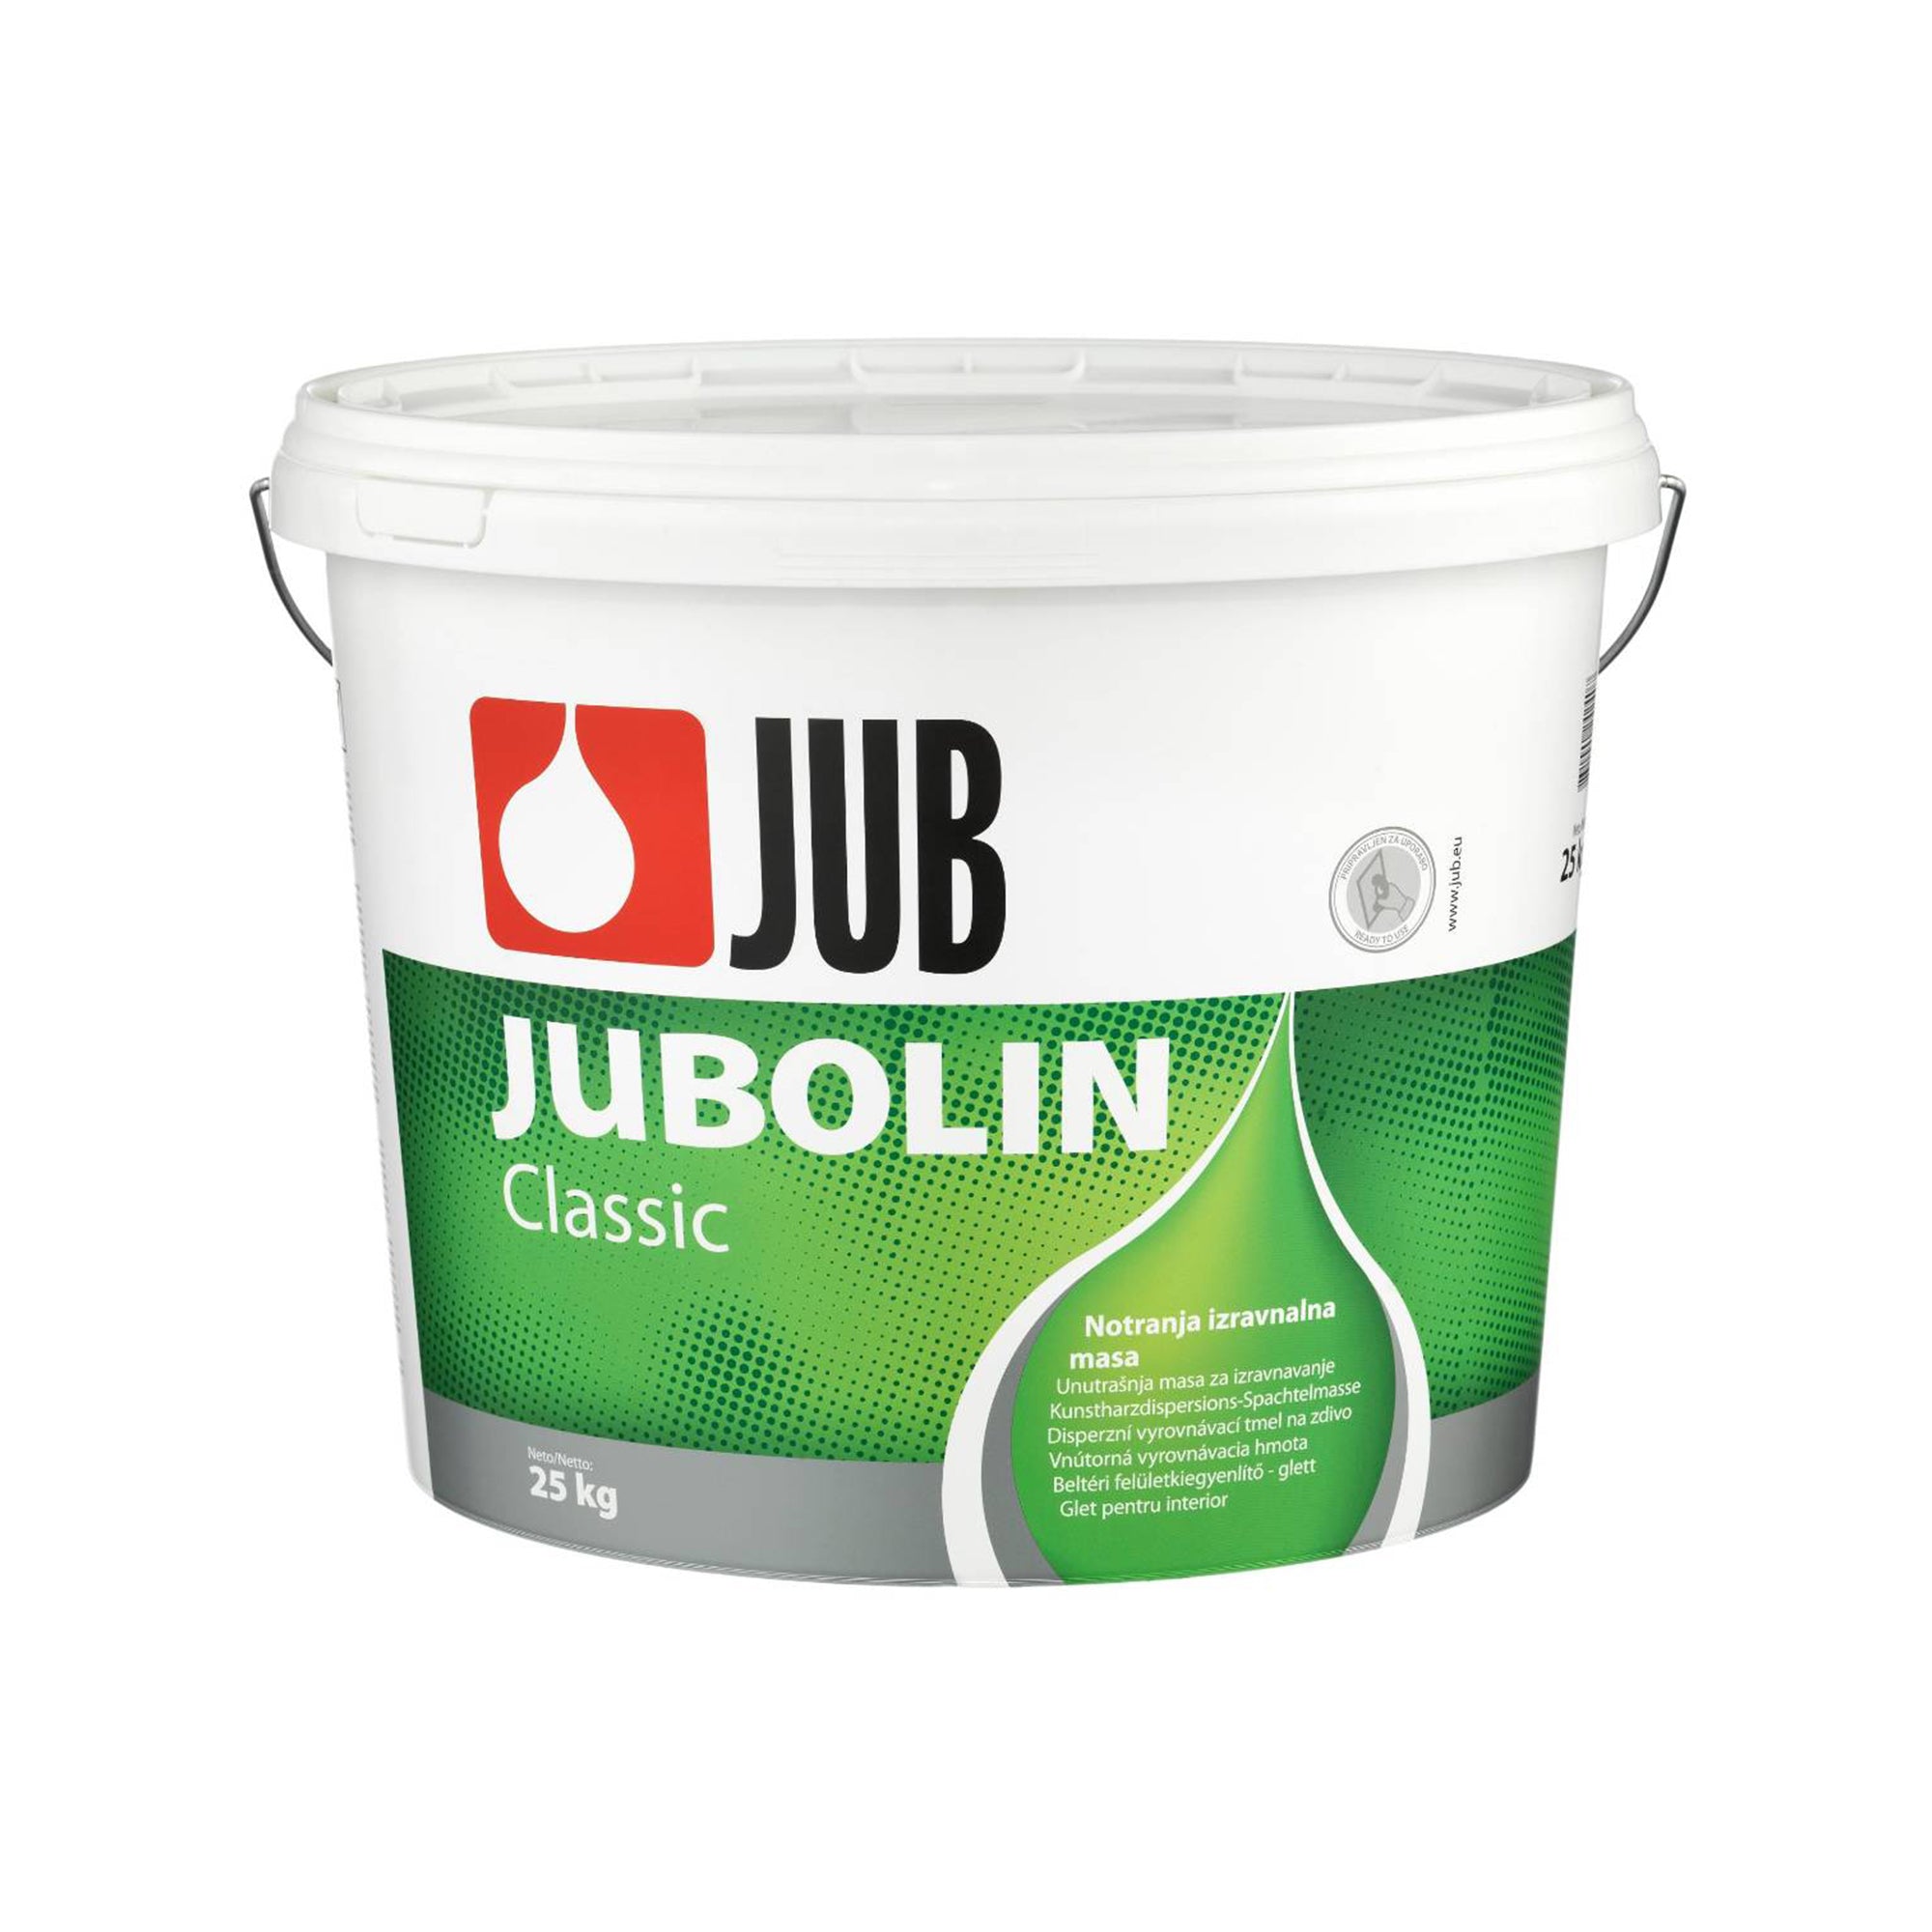 JUB JUBOLIN Classic disperzní stěrkový tmel na zdivo 25 kg